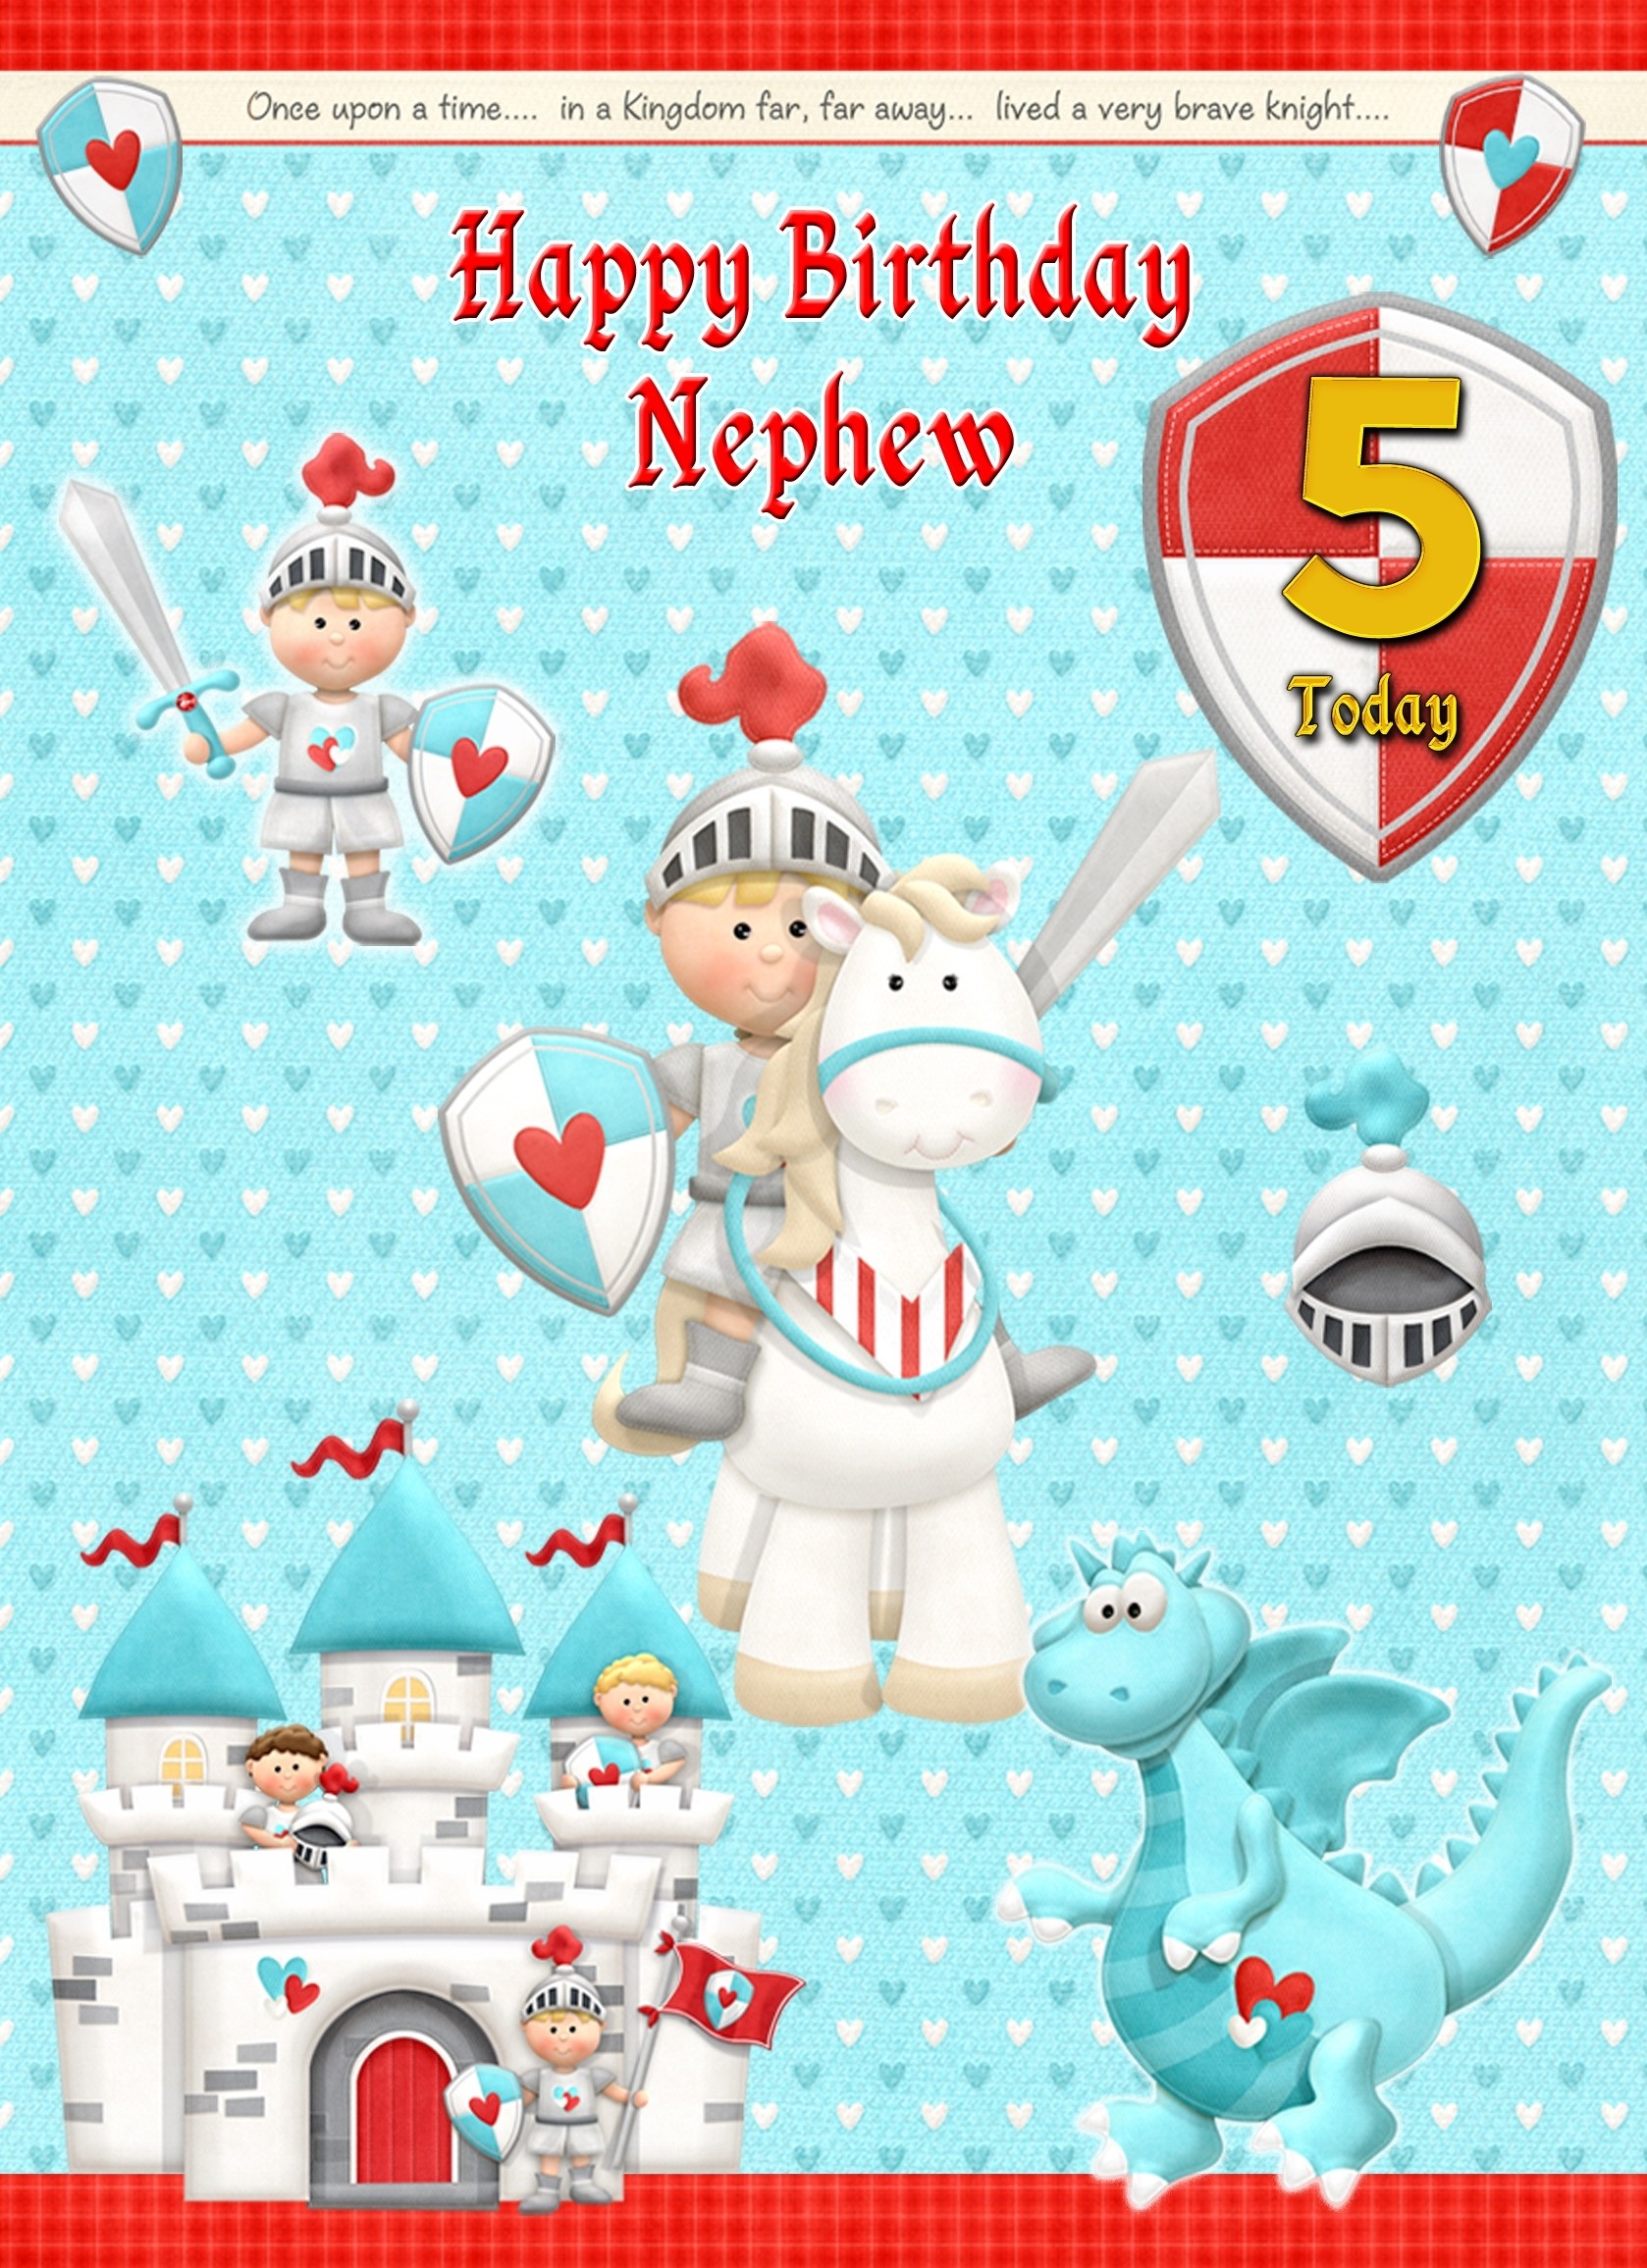 Kids 5th Birthday Hero Knight Cartoon Card for Nephew